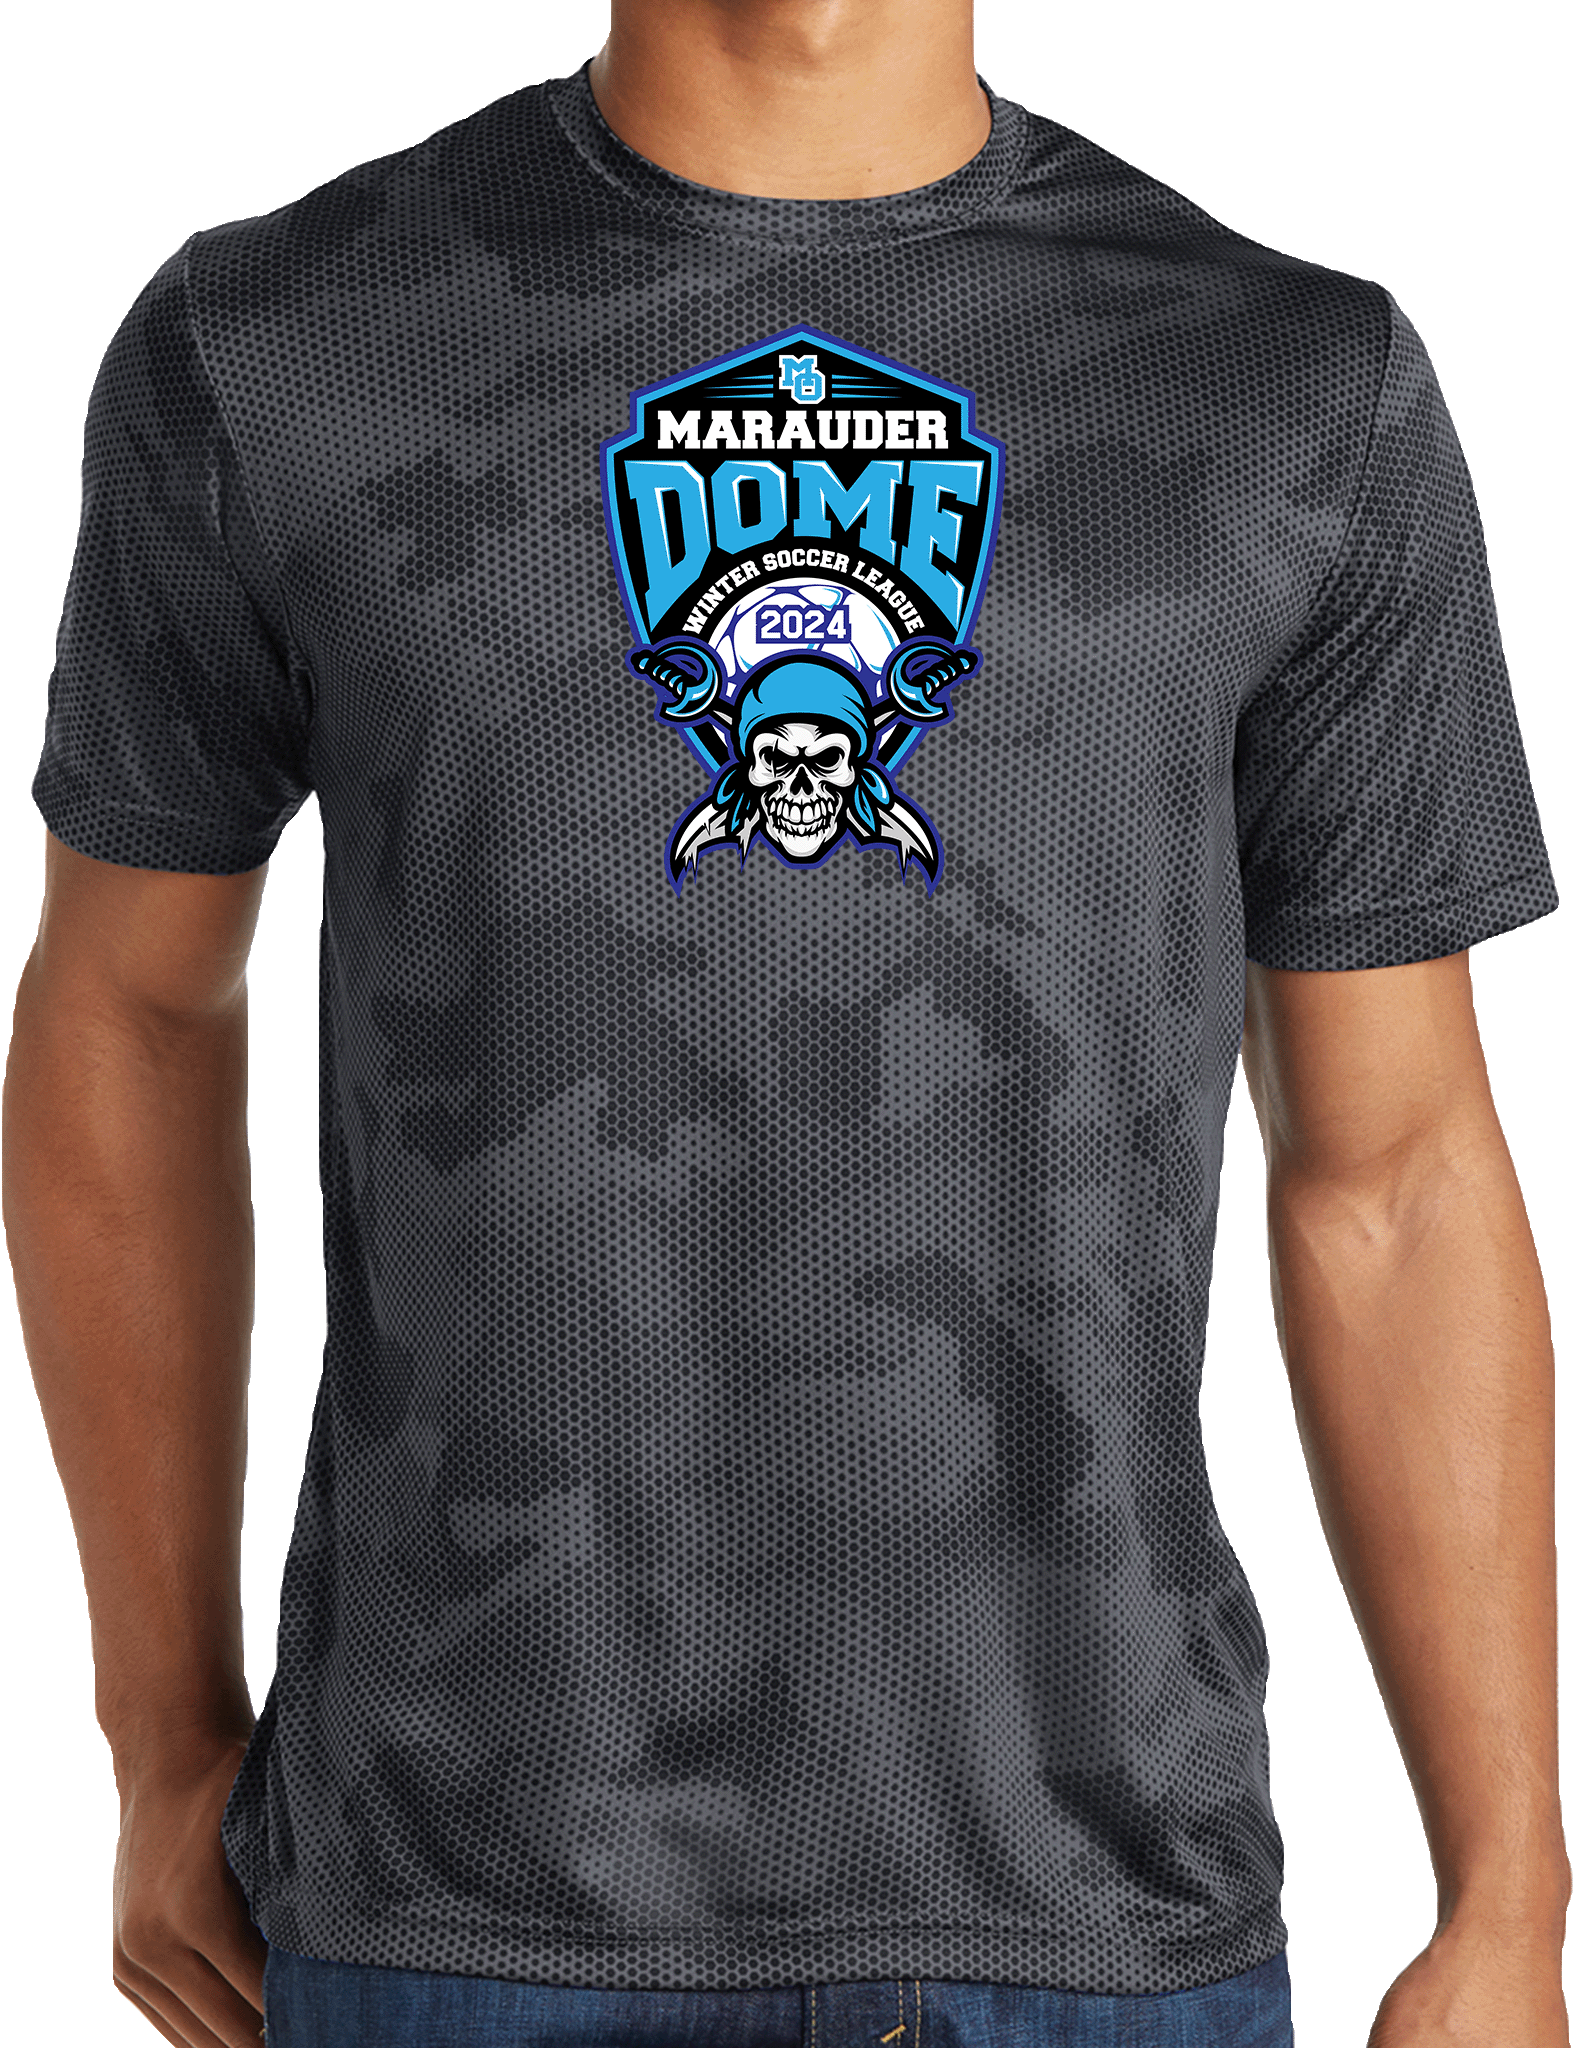 Performance Shirts - 2024 Marauder Dome Winter Soccer League